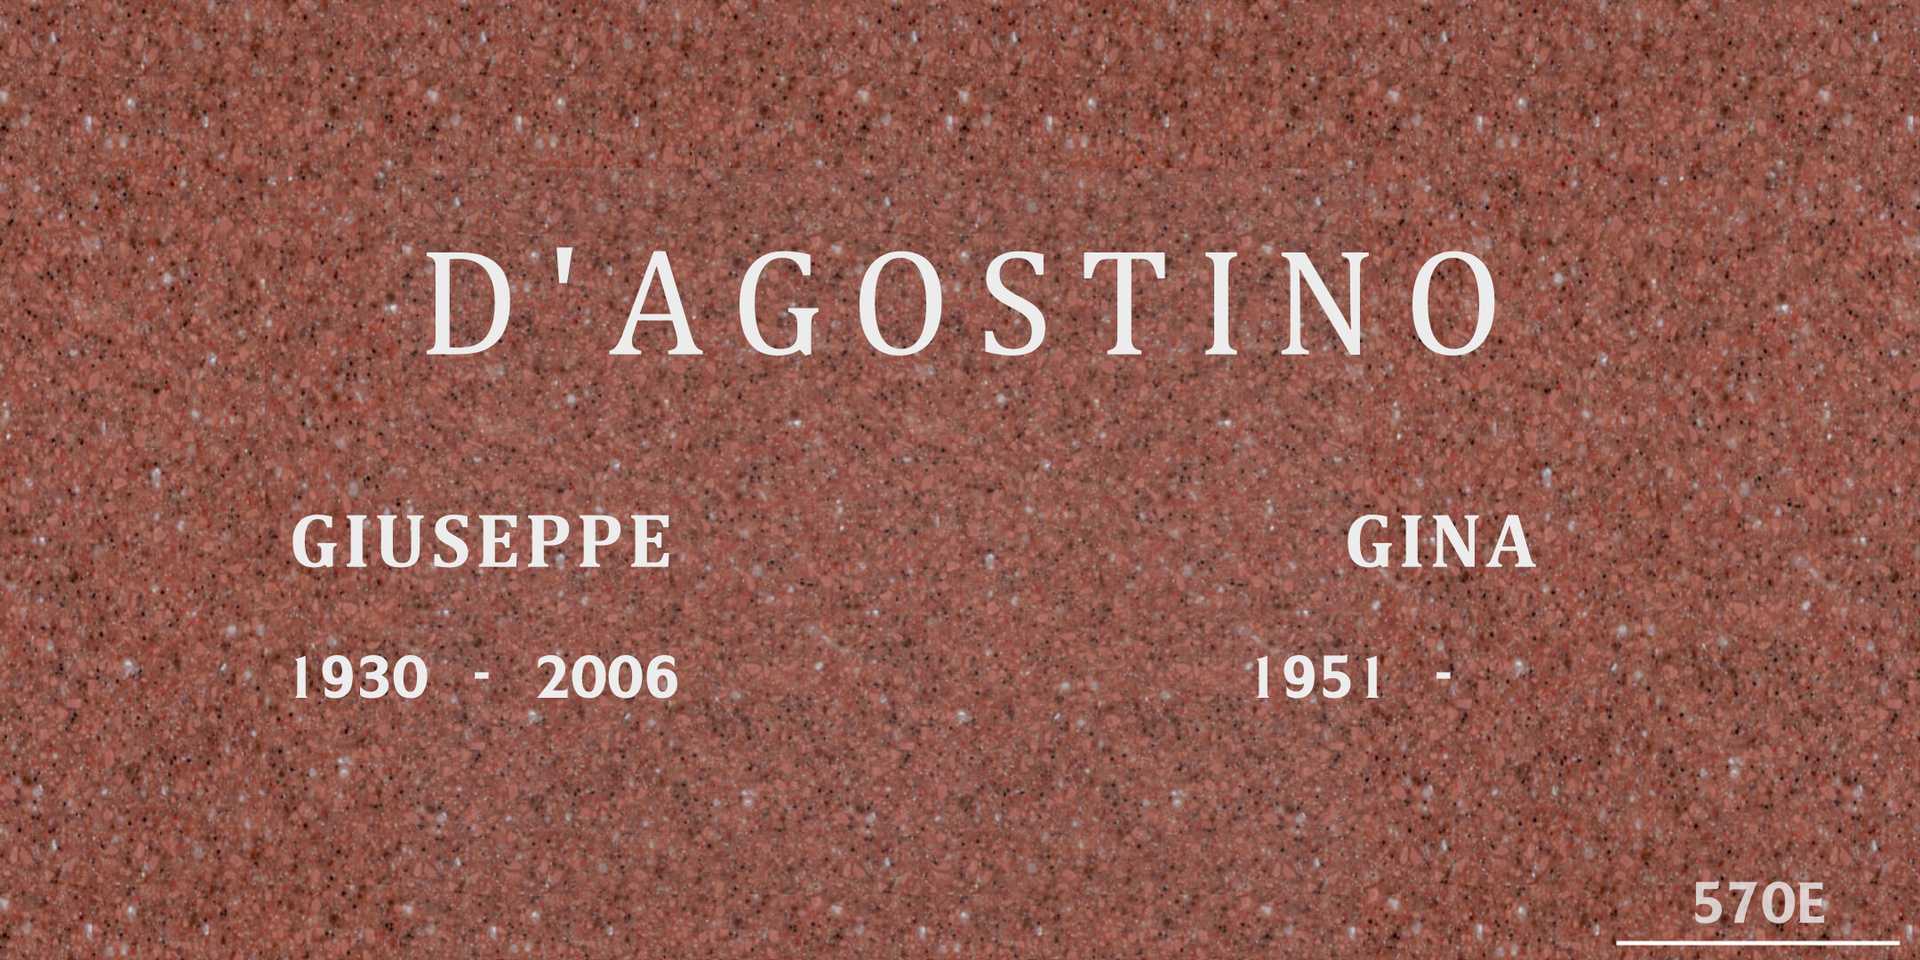 Giuseppe D'Agostino's grave